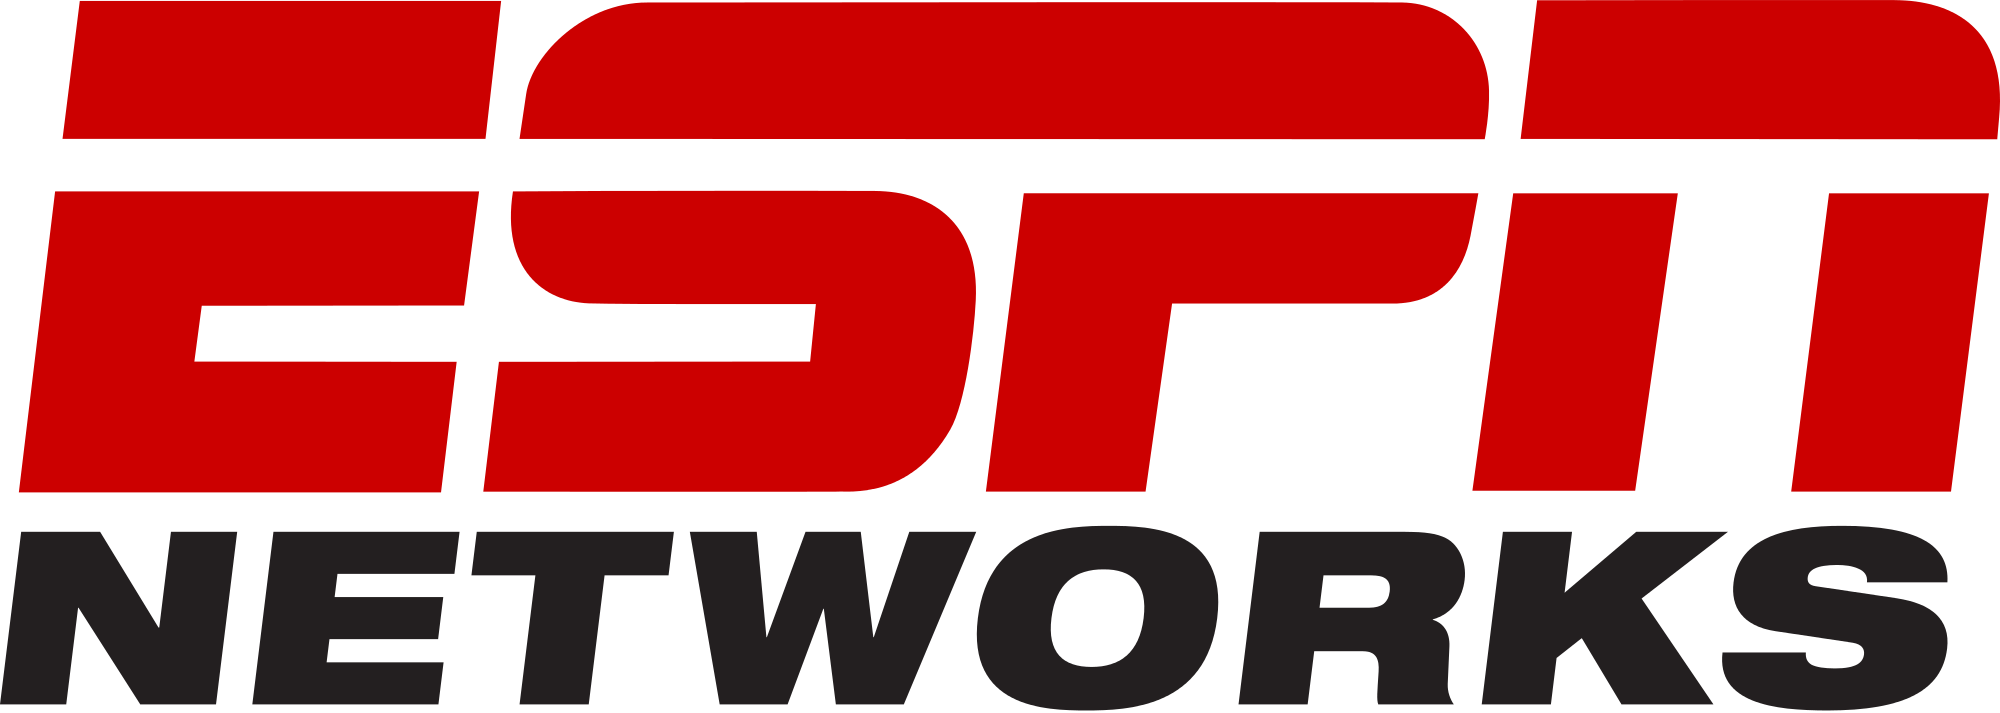 ESPN Logo - File:ESPN Networks logo.svg - Wikimedia Commons